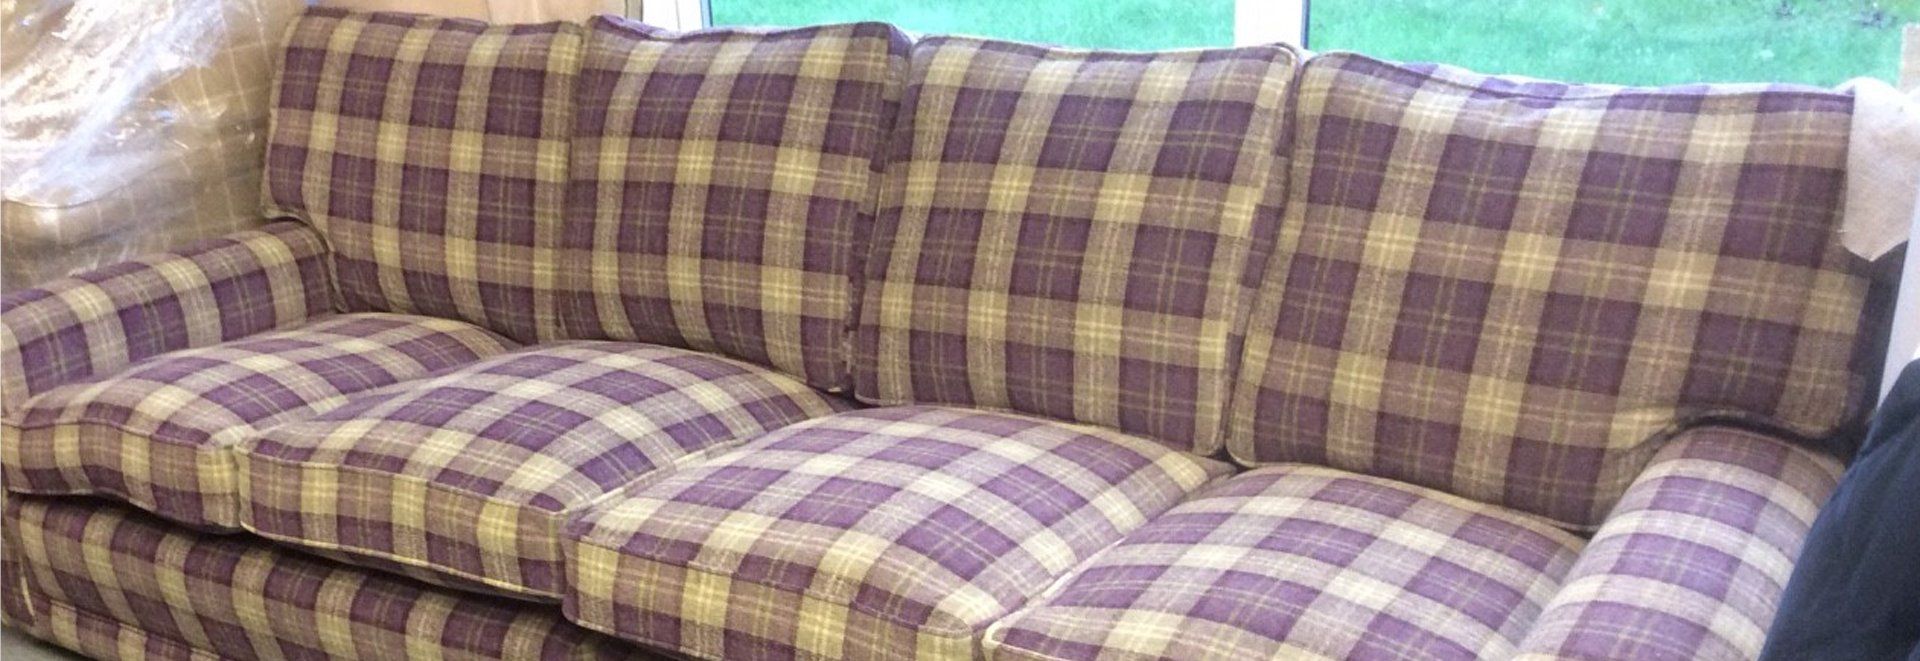 checkered sofa